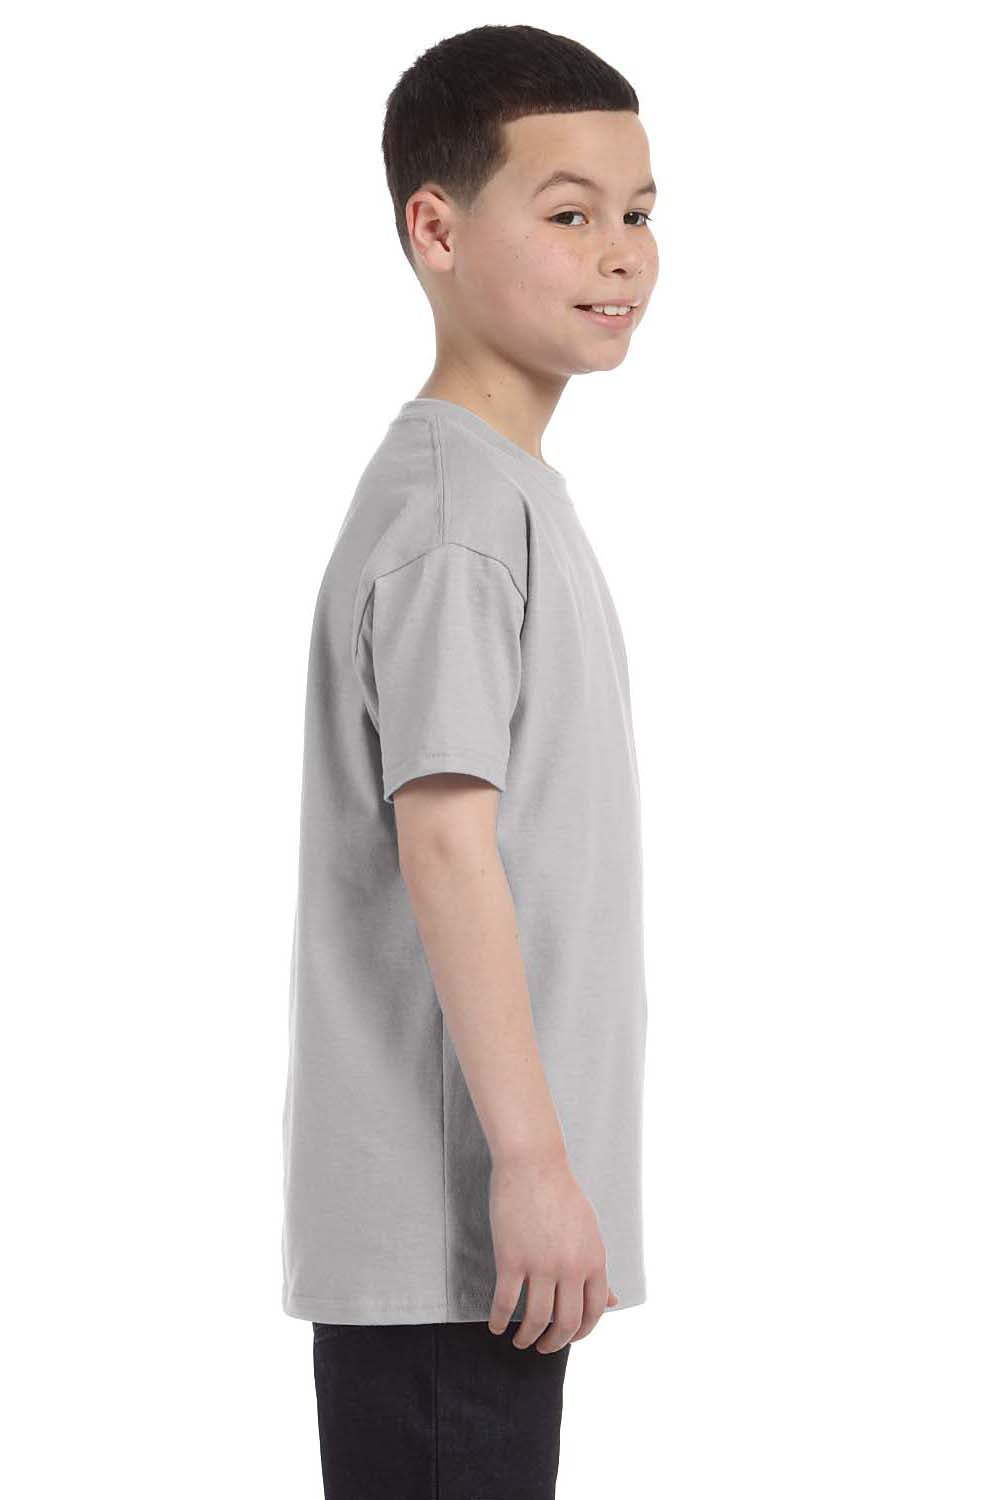 Hanes 54500 Youth ComfortSoft Short Sleeve Crewneck T-Shirt Light Steel Grey Side